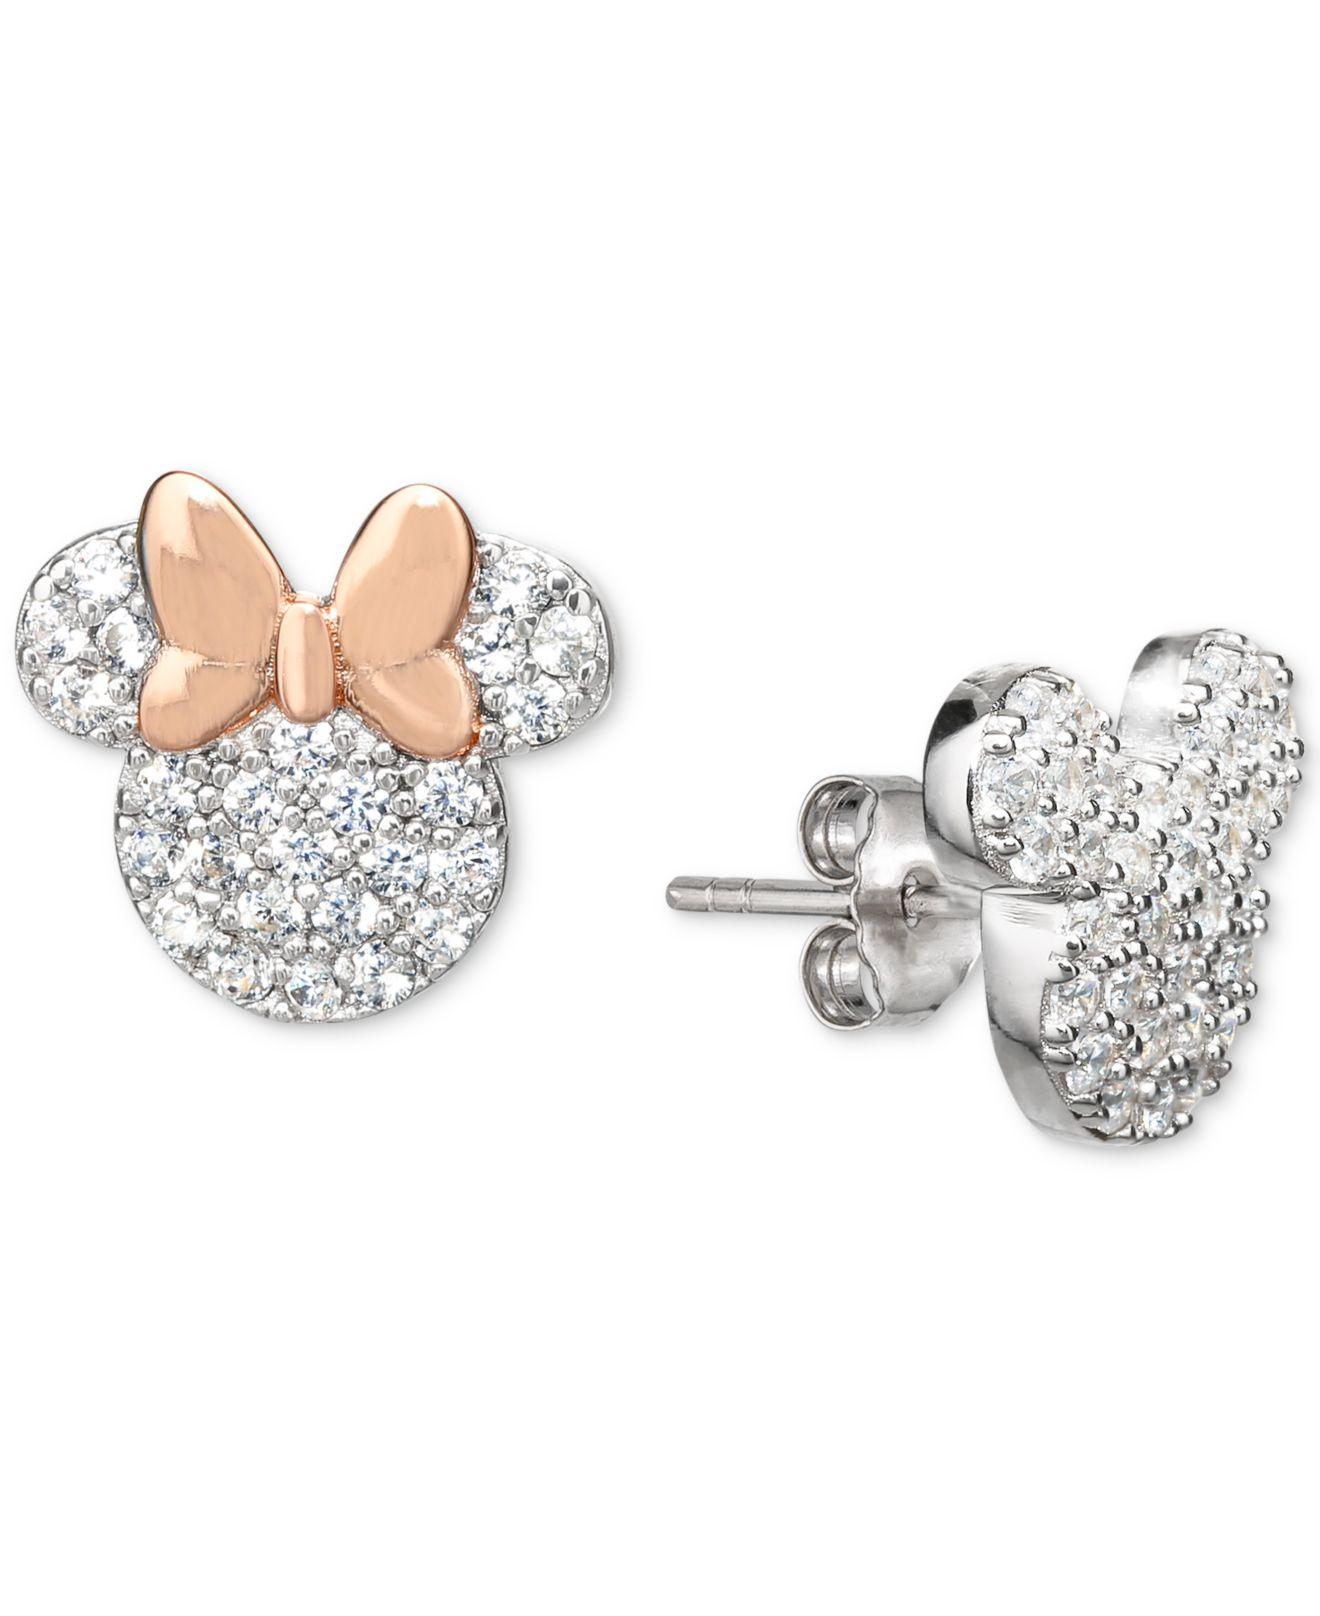 Disney Micky Mouse Stud Earrings 14K White Gold Fn Pink & CZ Stone Alloy Womens Girls Jewellery 